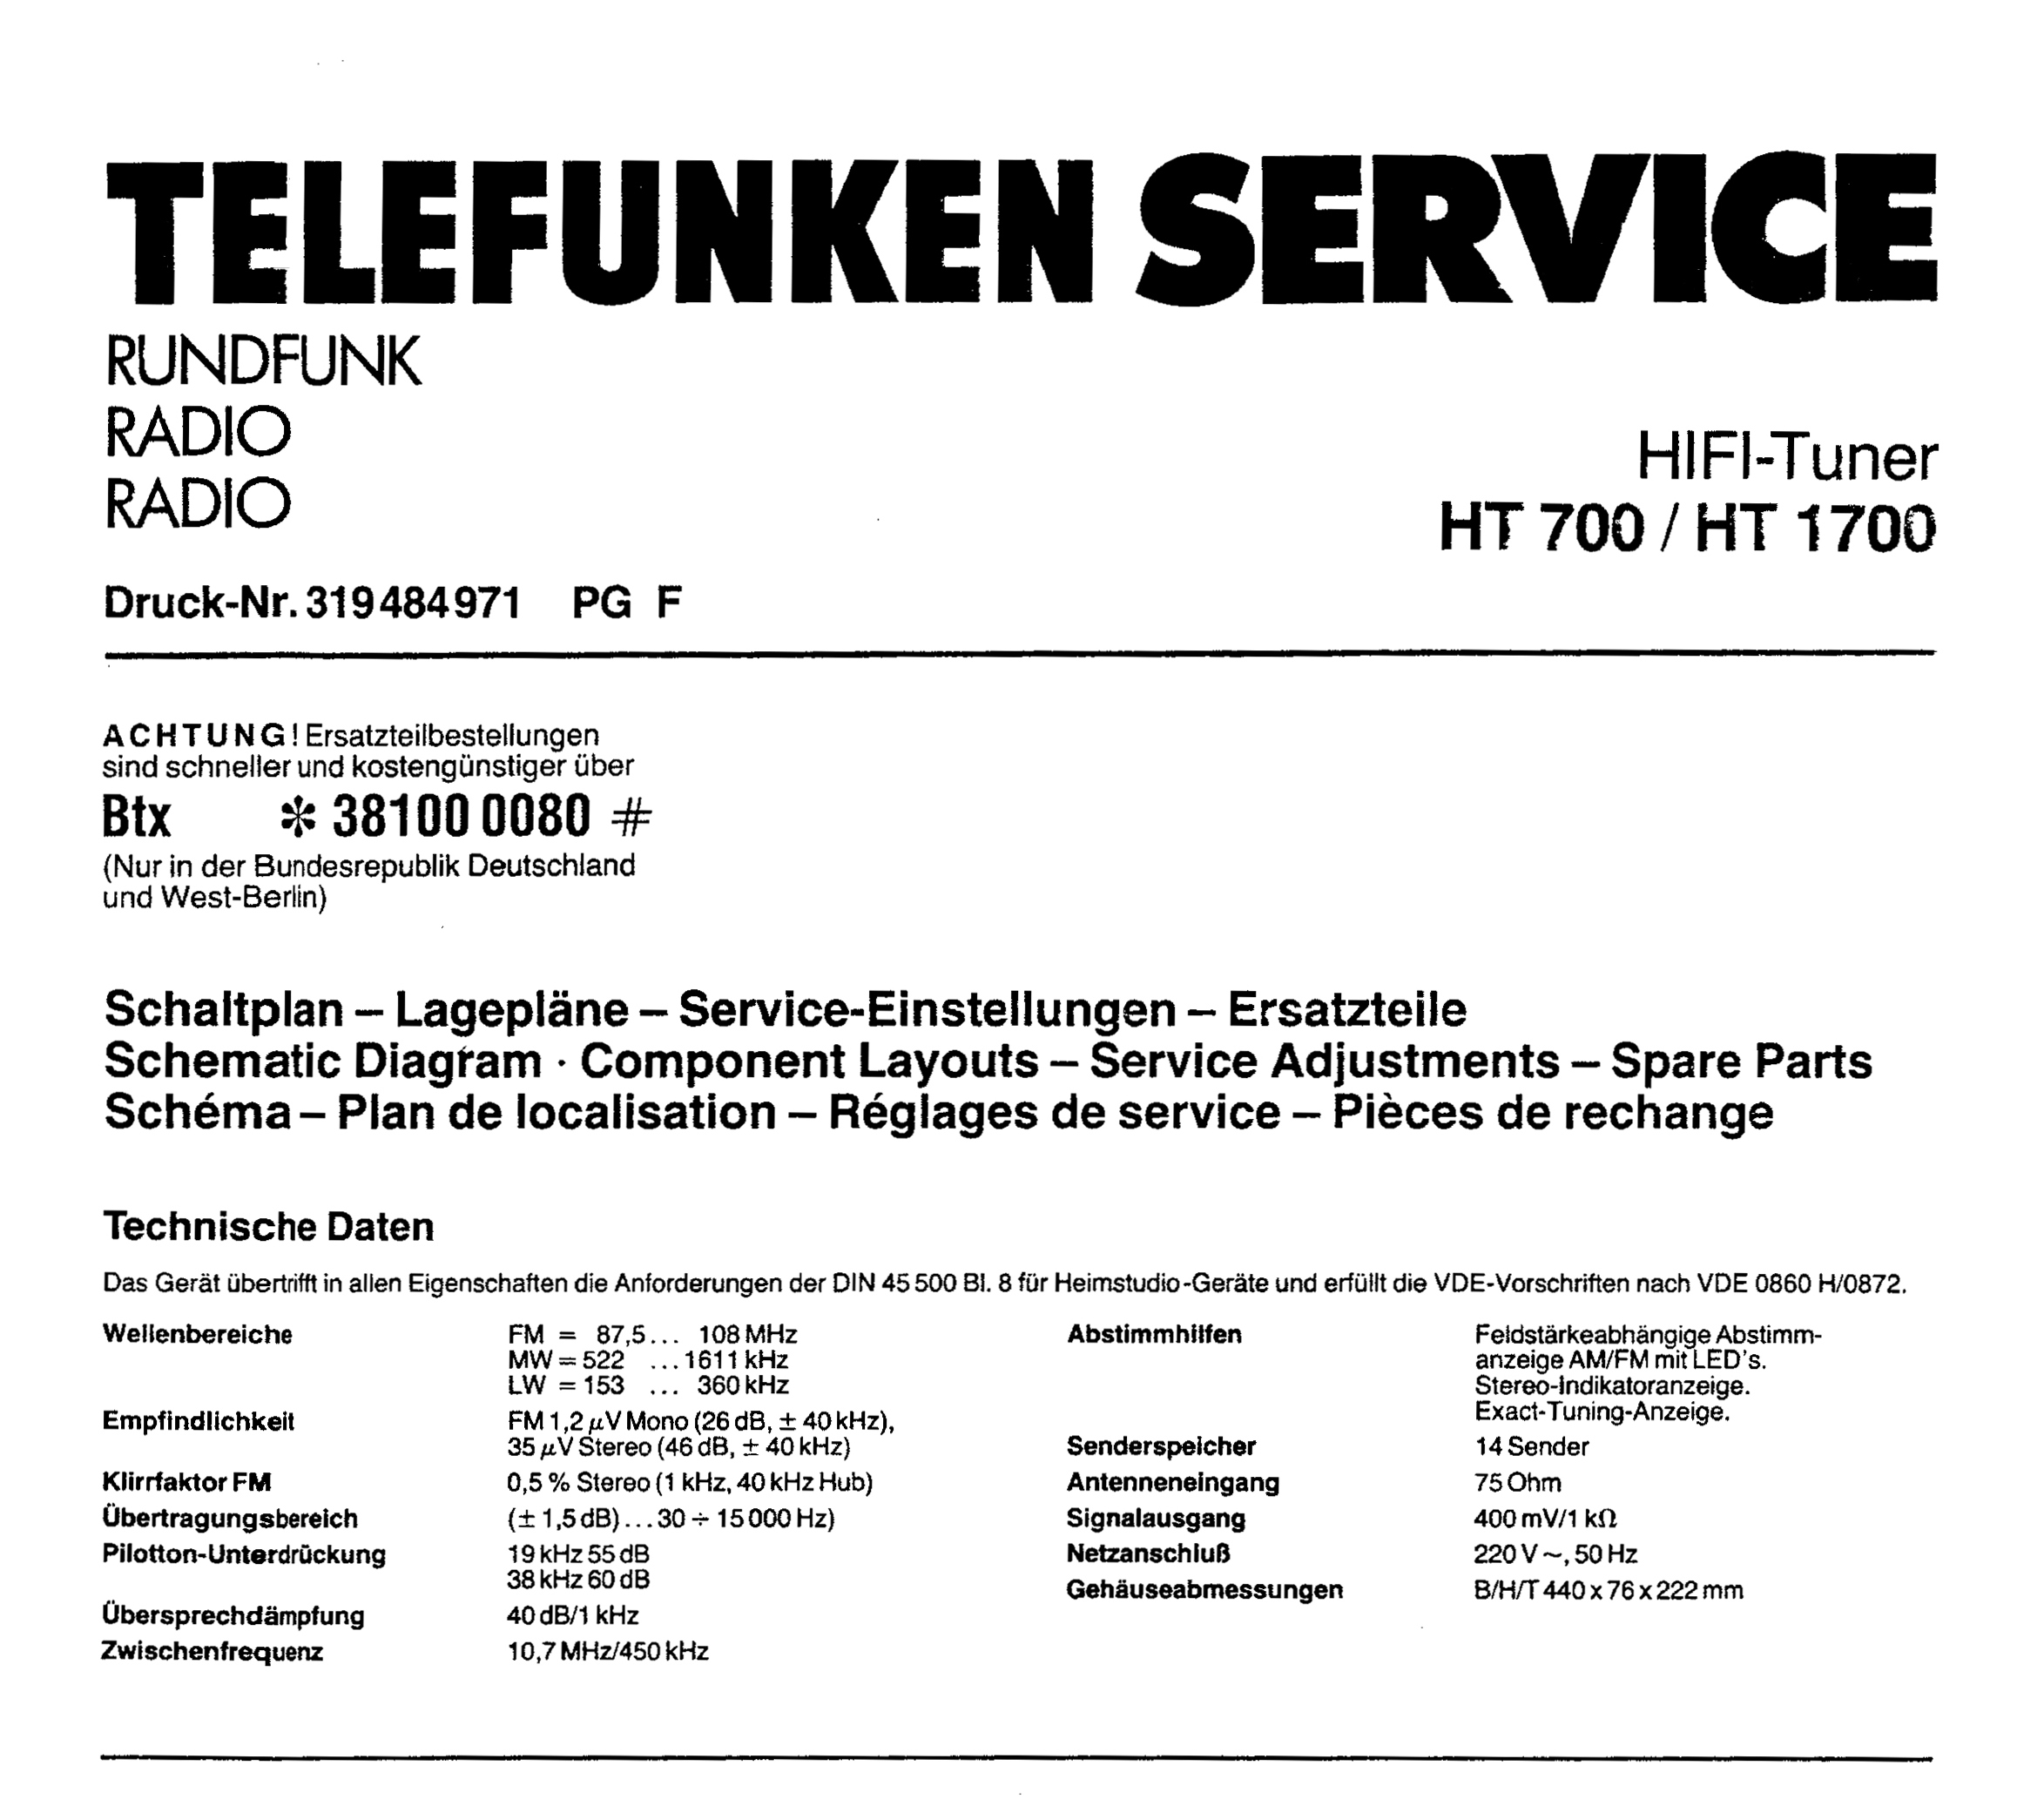 Telefunken HT-700-1700-Daten-1985.jpg